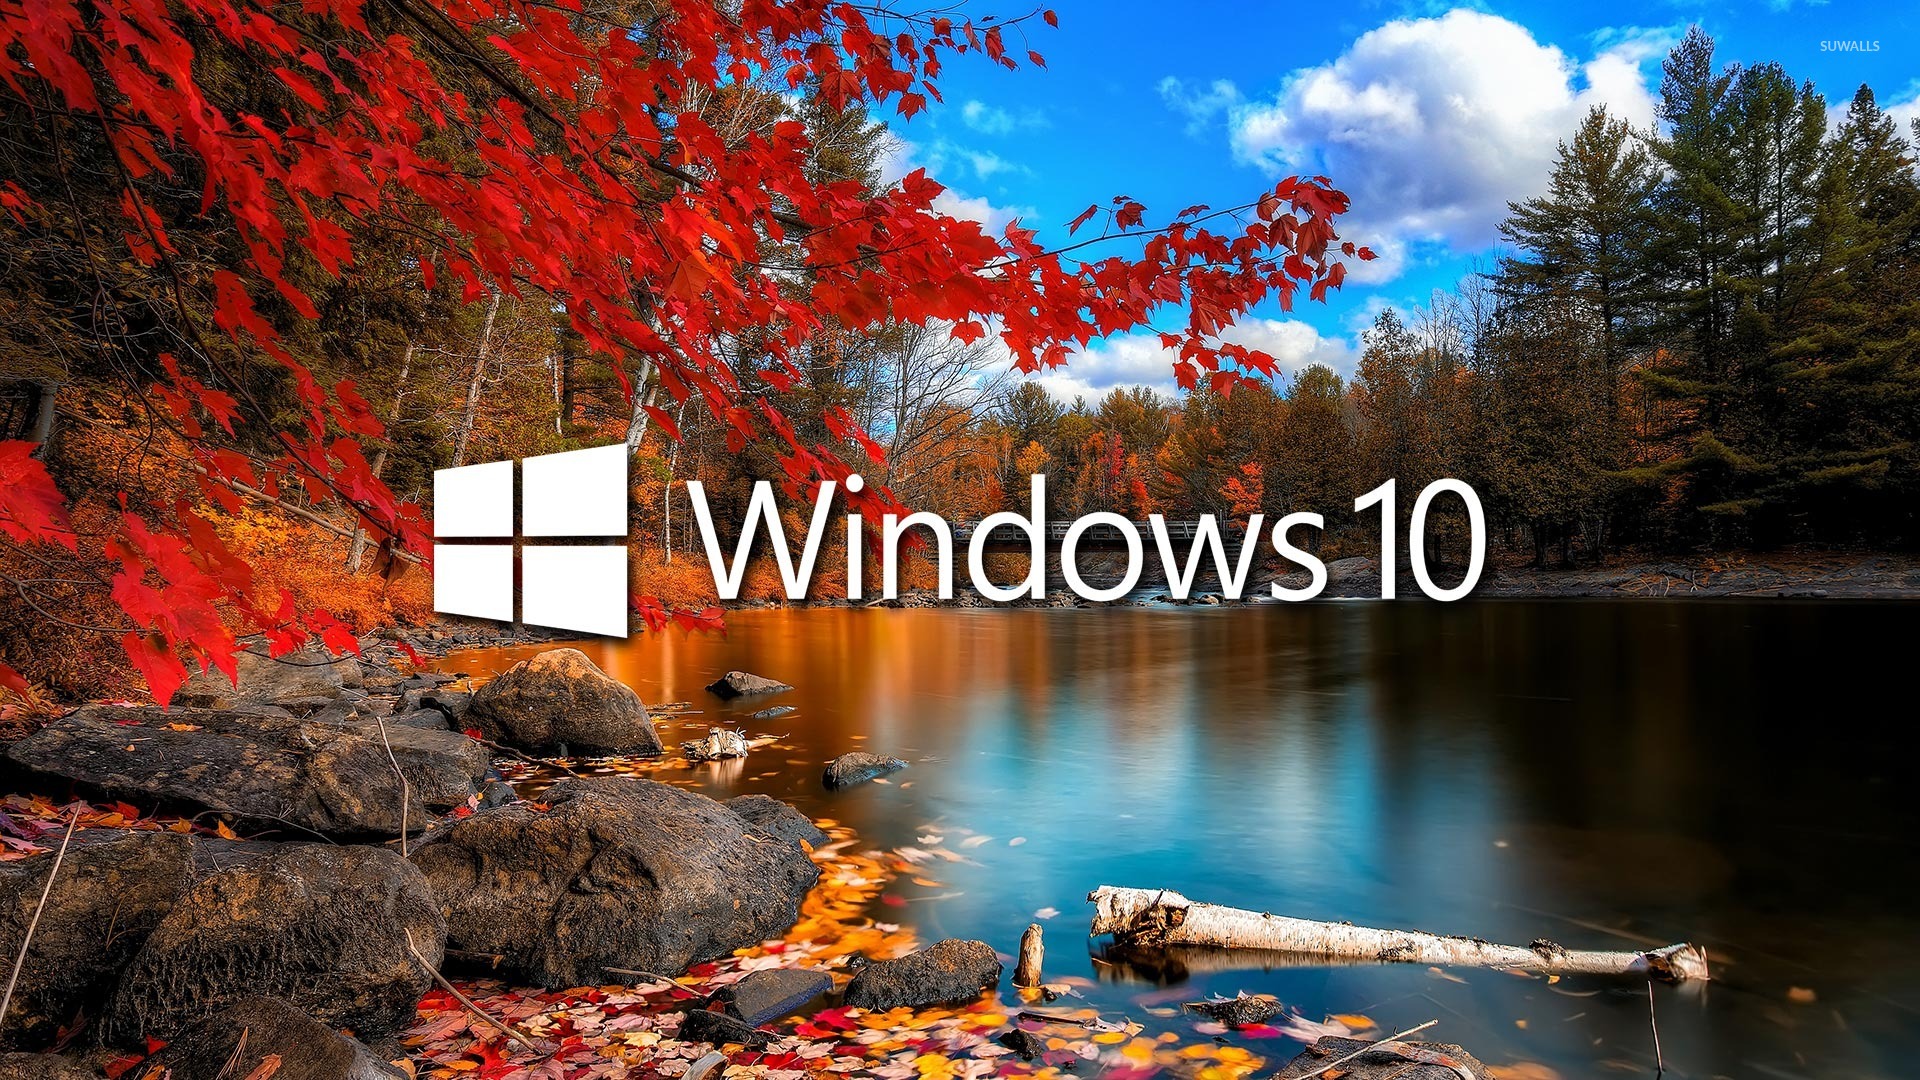 Windows 10 Over The Lake White Text Logo Wallpaper Computer